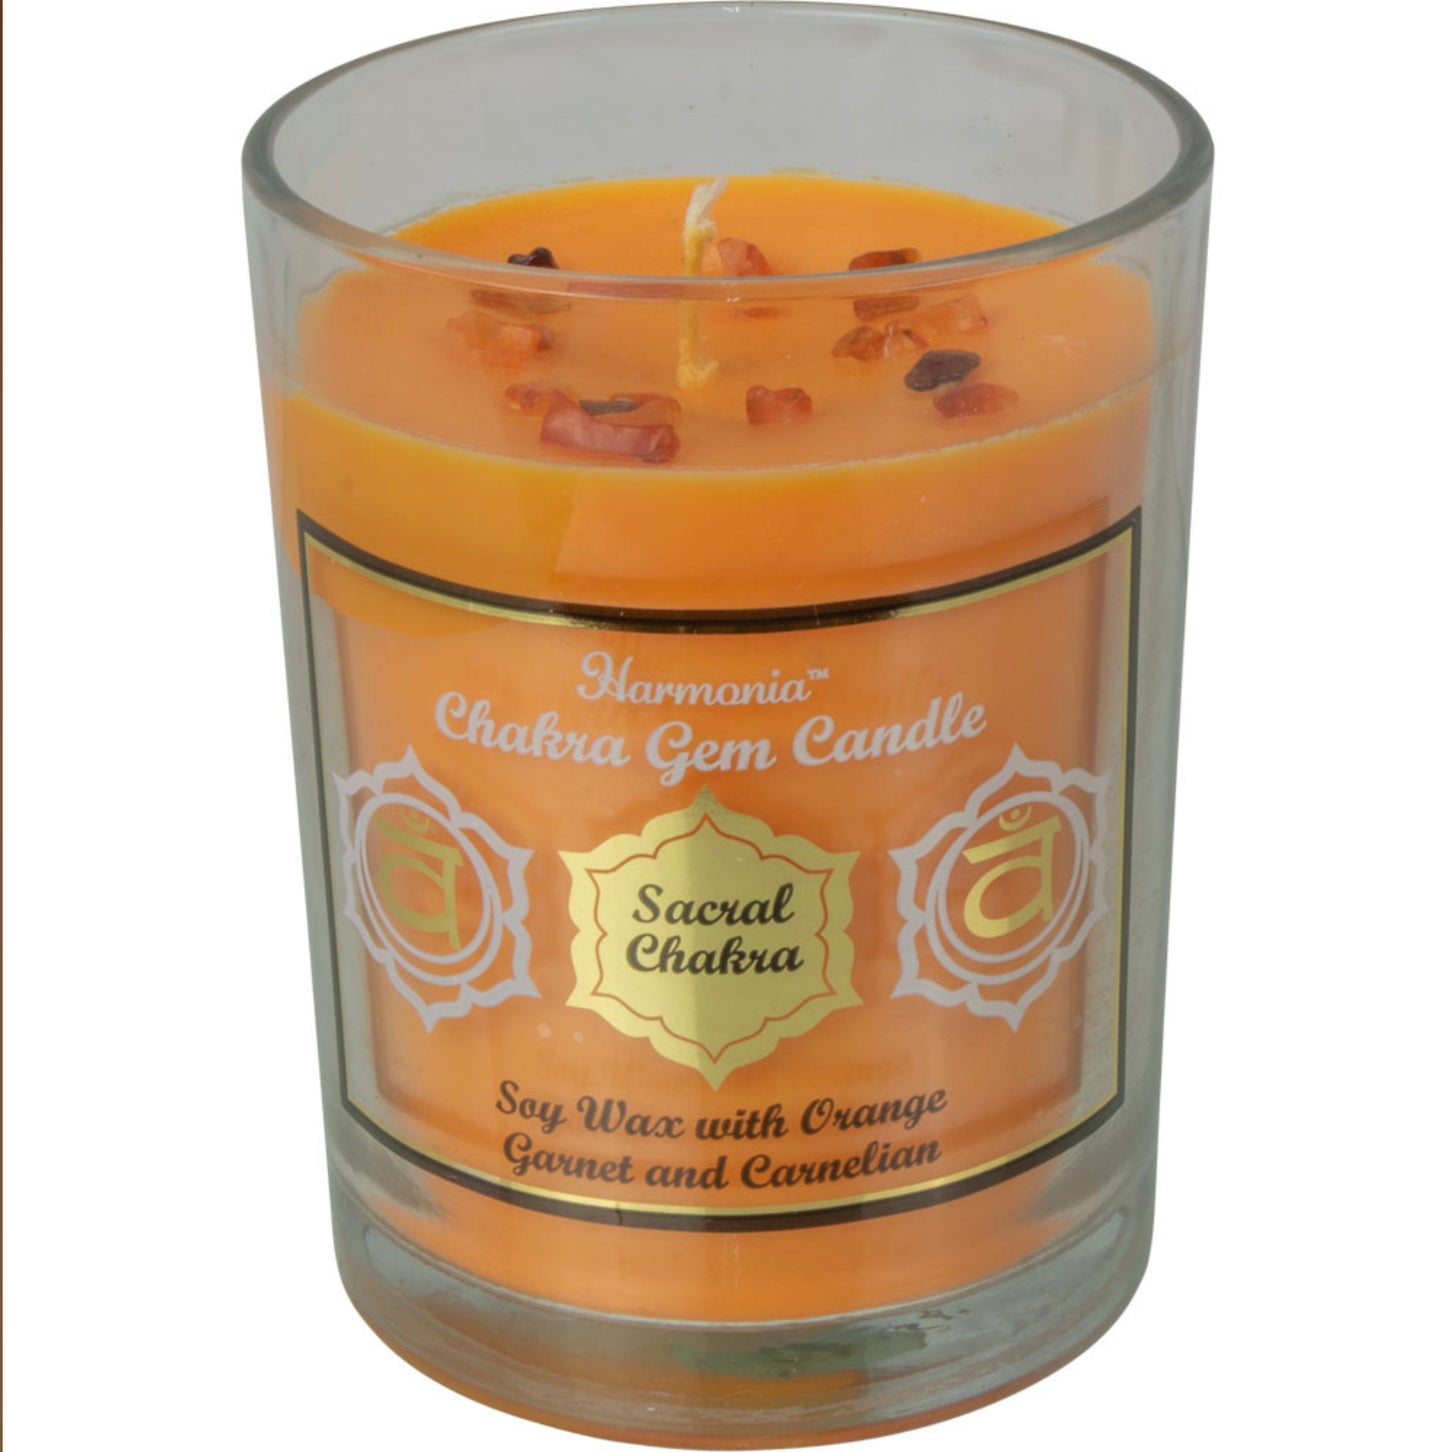 Harmonia Soy Gem Candle - Sacral Chakra - Garnet & Carnelian - Orange Scented